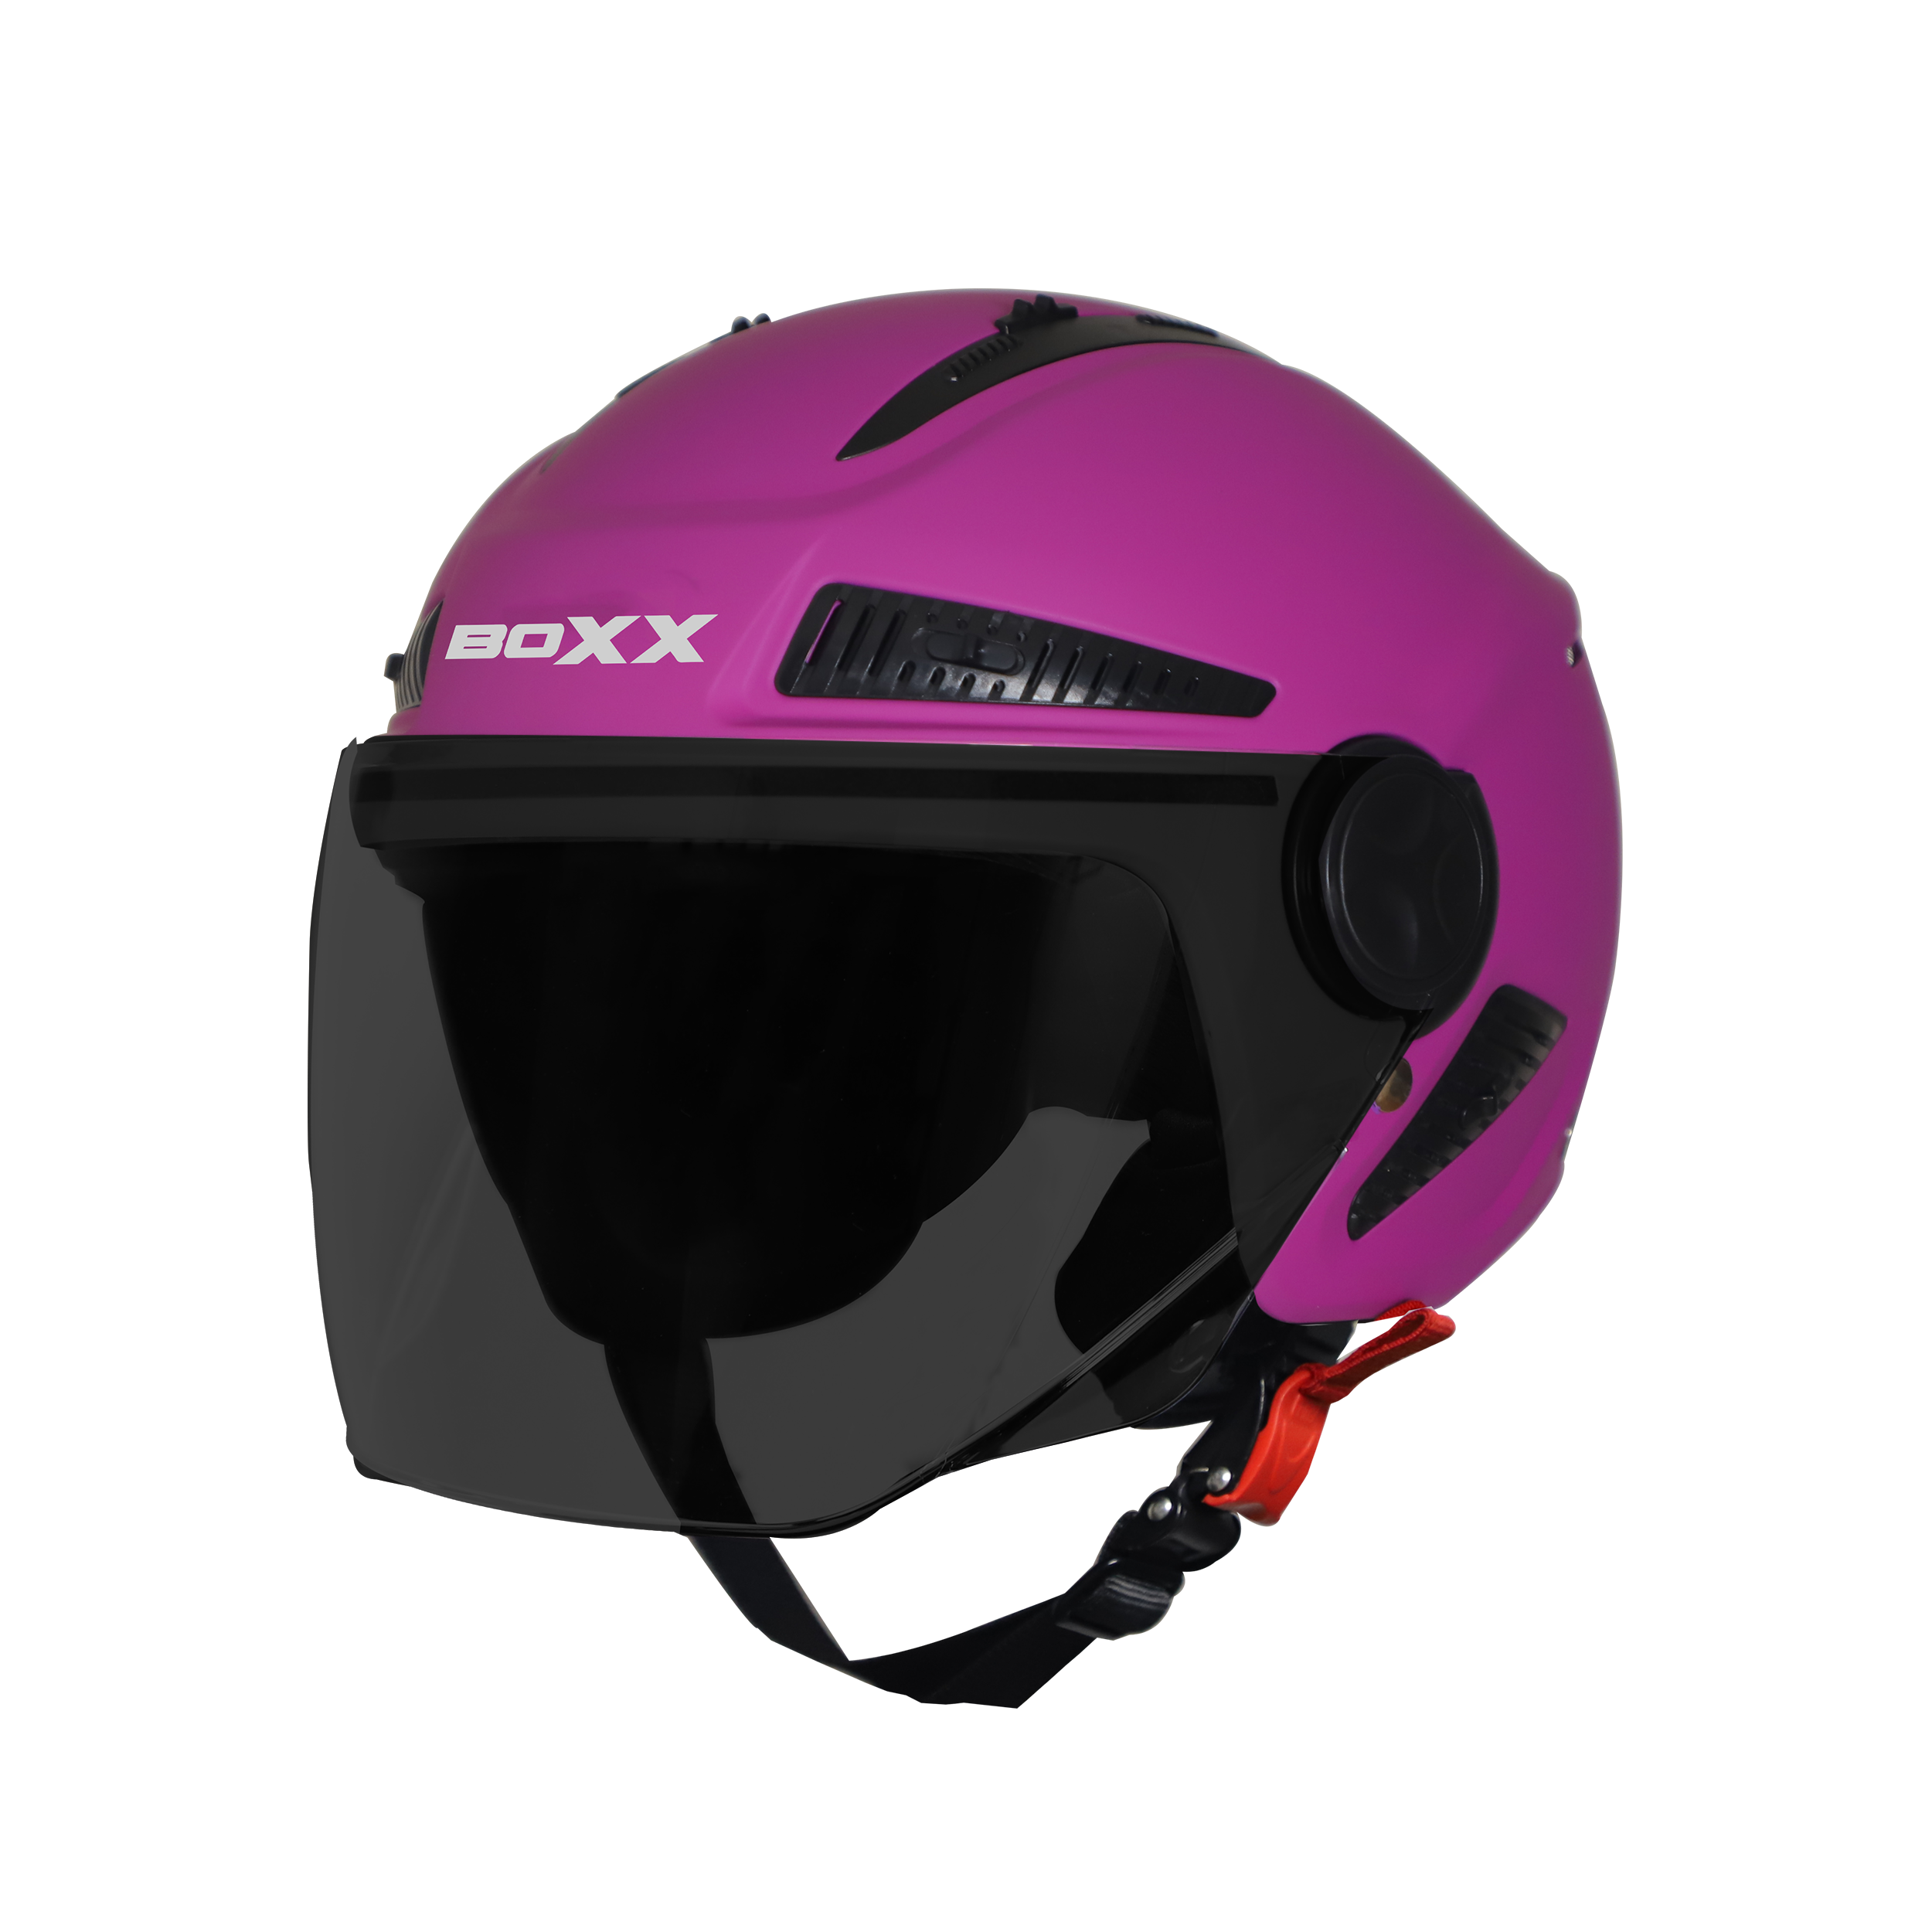 Steelbird SBH-24 Boxx ISI Certified Open Face Helmet For Men And Women (Matt Purple With Smoke Visor)